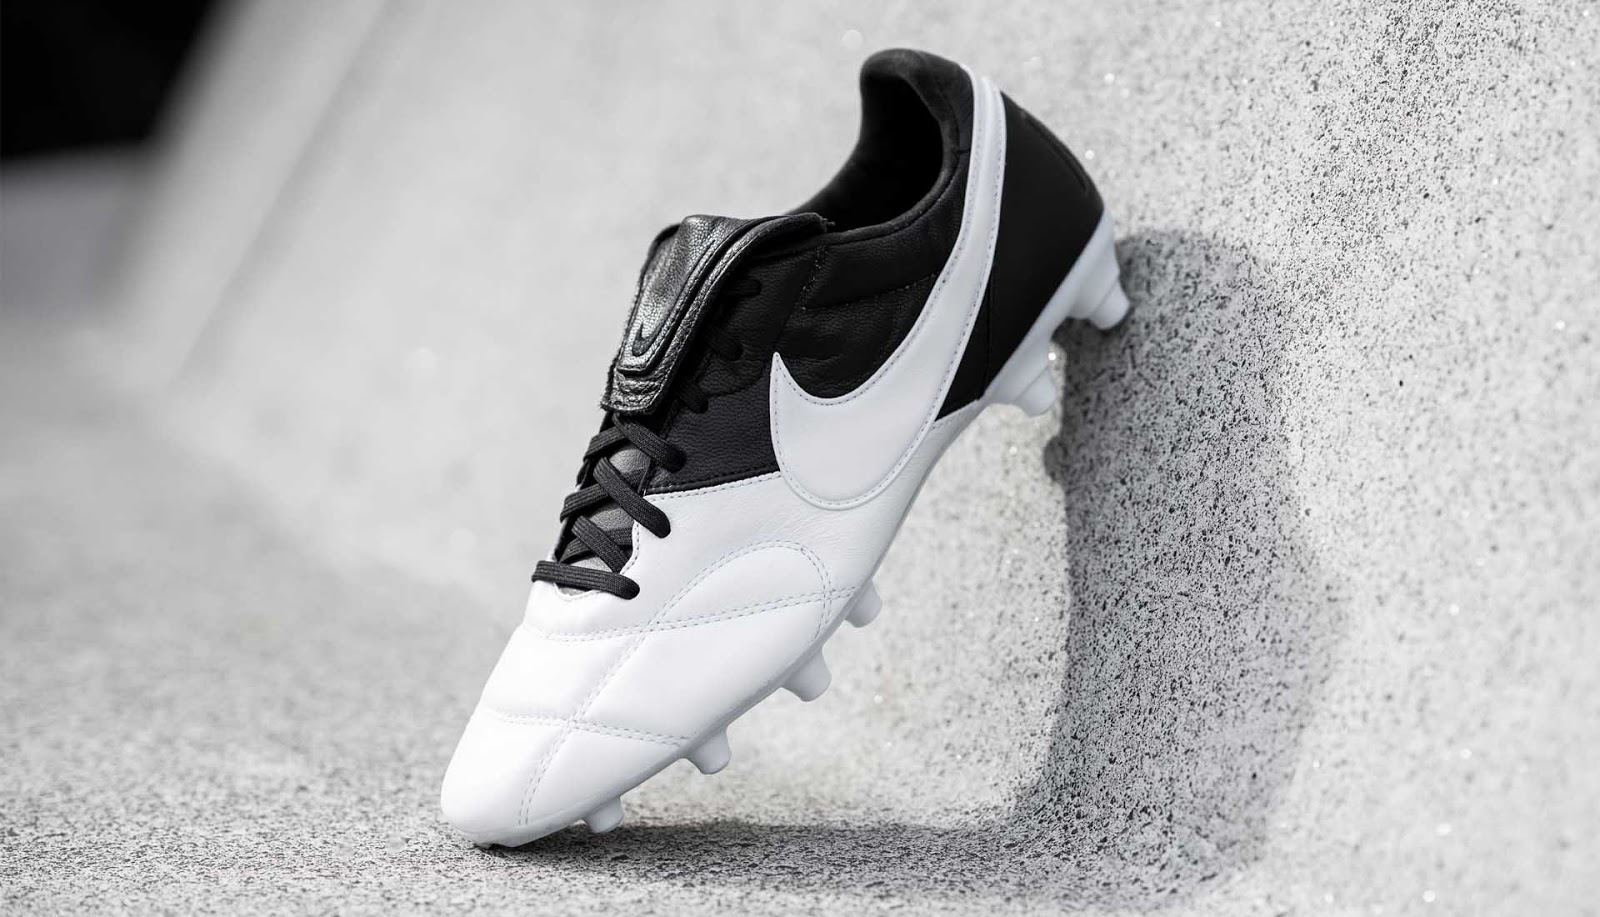 Classy White / Black Euro 2012 Inspired Nike Premier II Boots Released ...